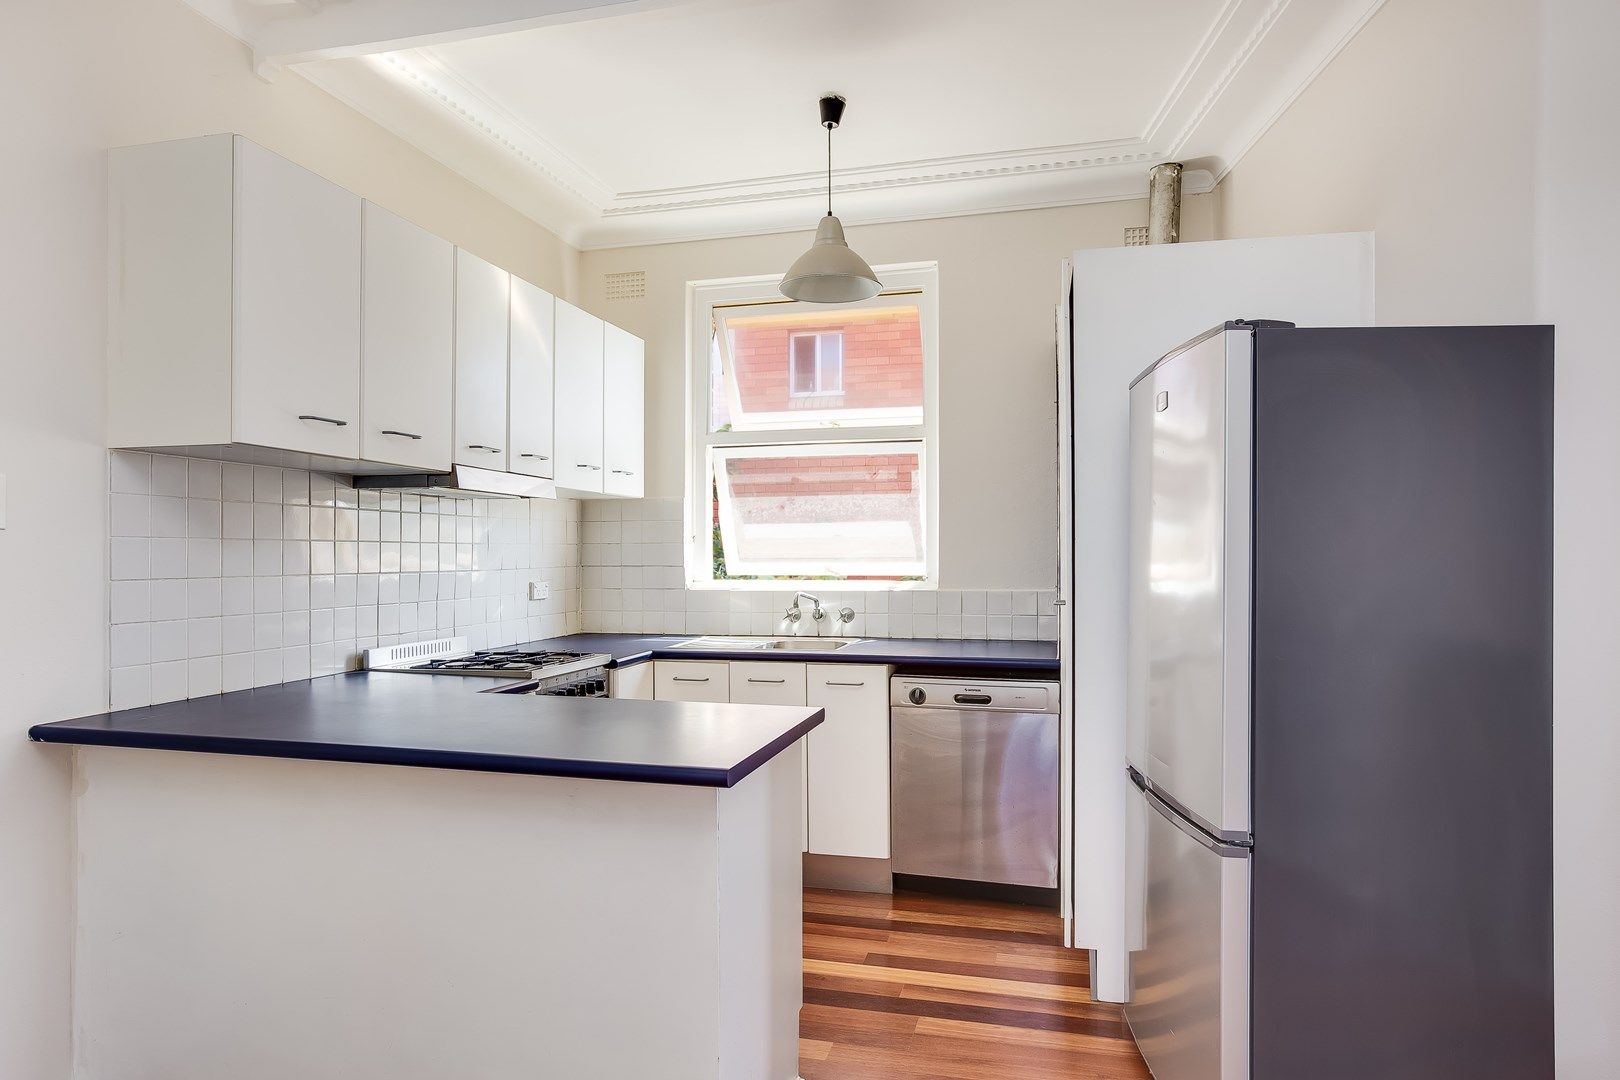 2 bedrooms Apartment / Unit / Flat in 3/17 Lodge Street BALGOWLAH NSW, 2093